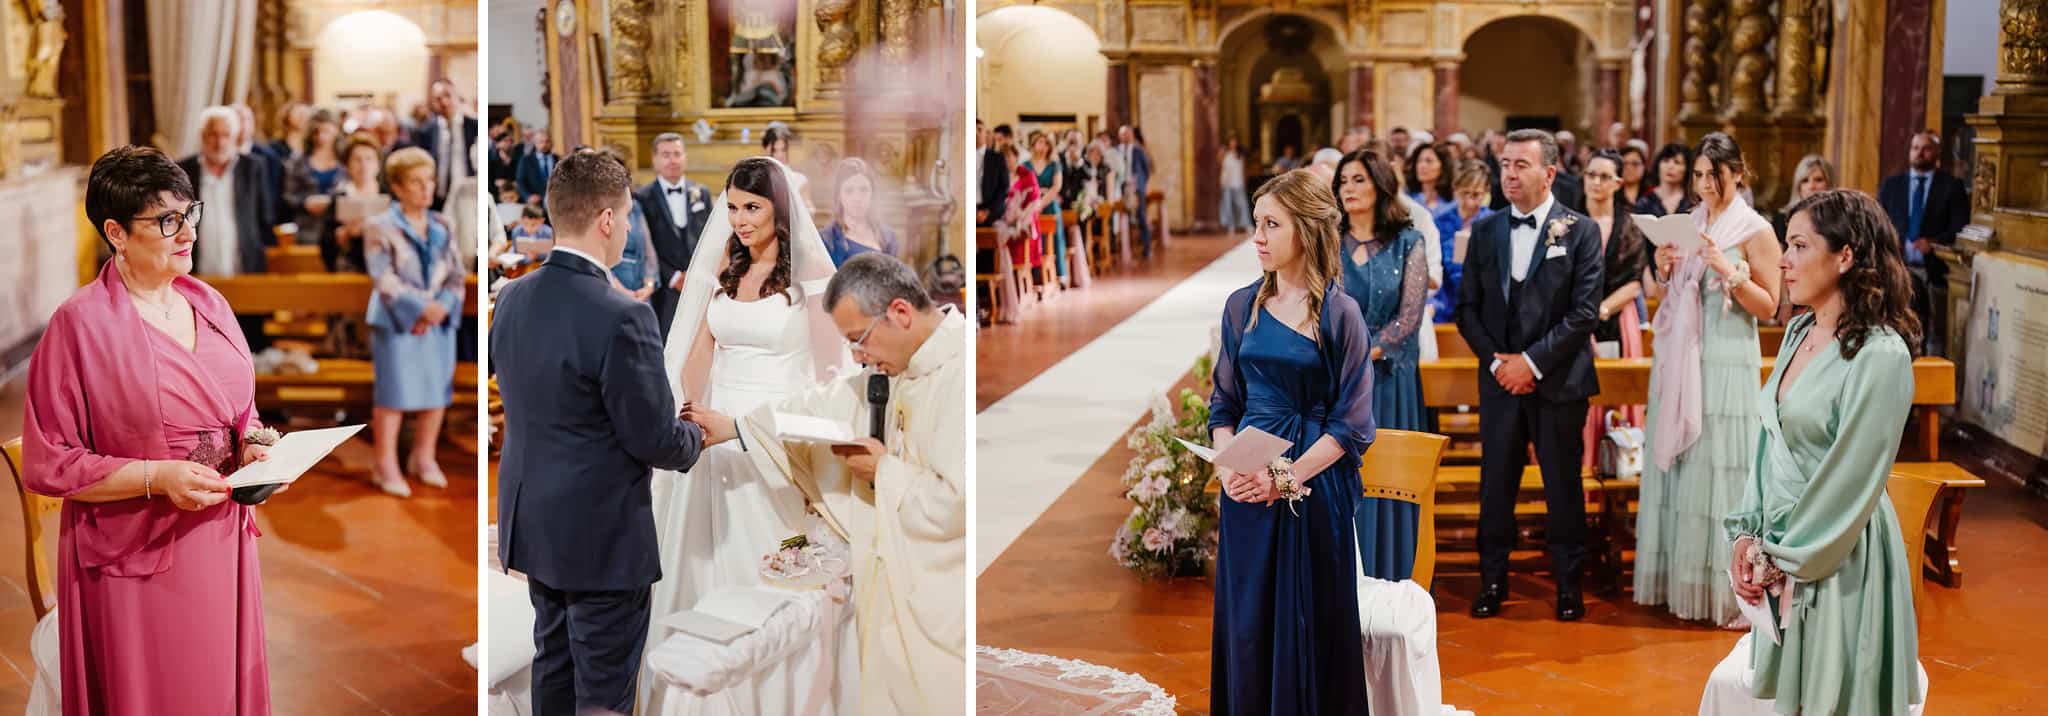 fotografo-matrimonio-abruzzo-cerimonia-chiesa-testimoni-sposi